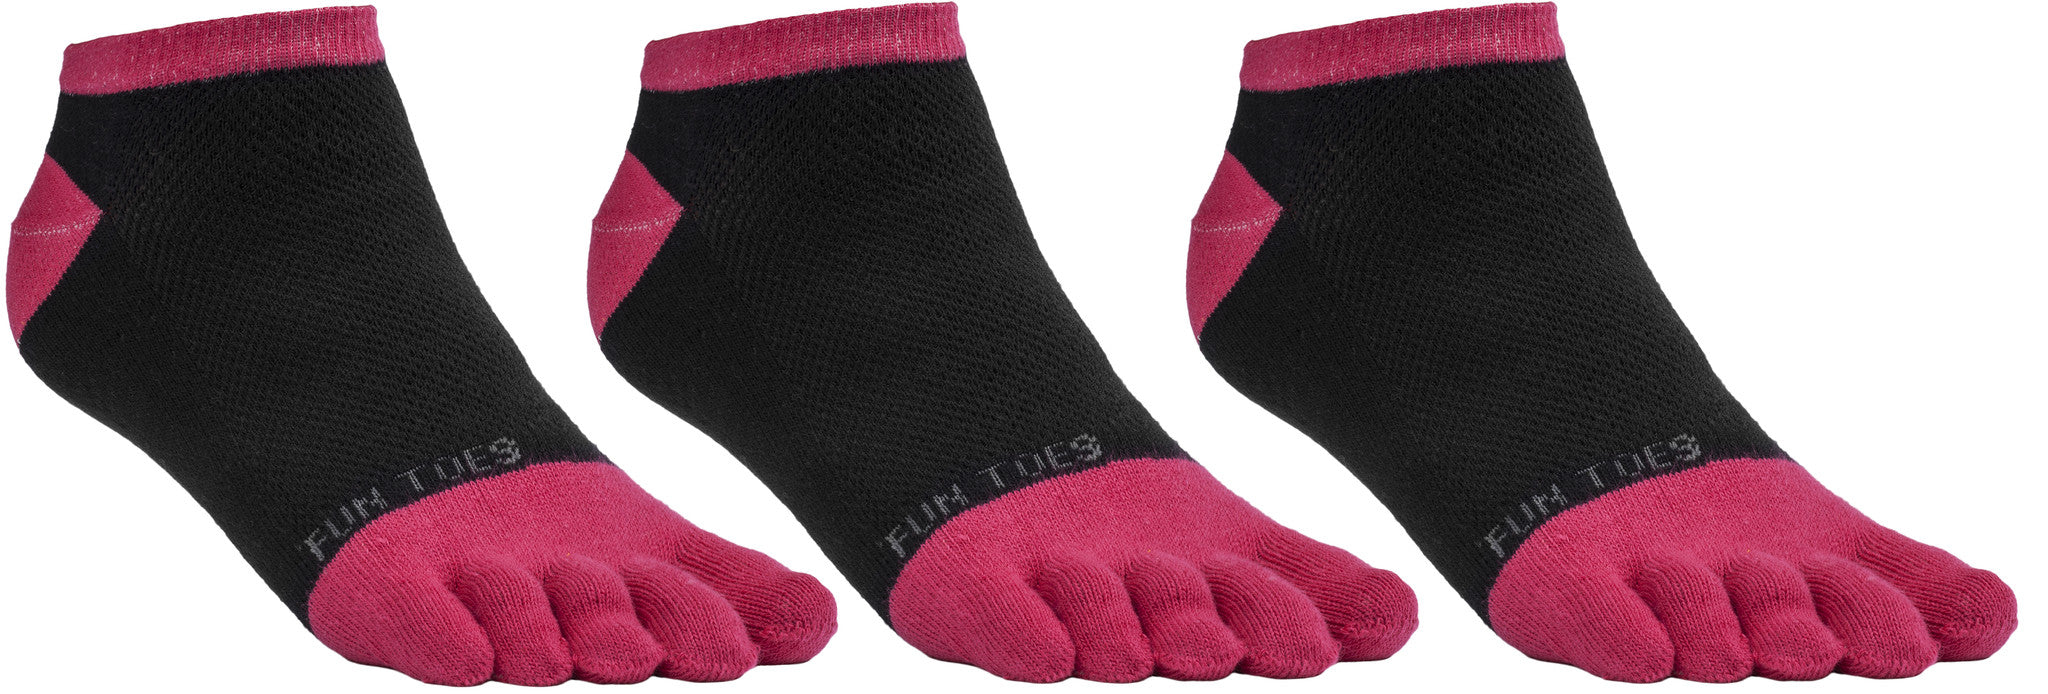 FUN TOES Women's Toe Socks Barefoot Running Socks Size 9-11 Shoe Size 4-10  Pack of 3 Pairs Black